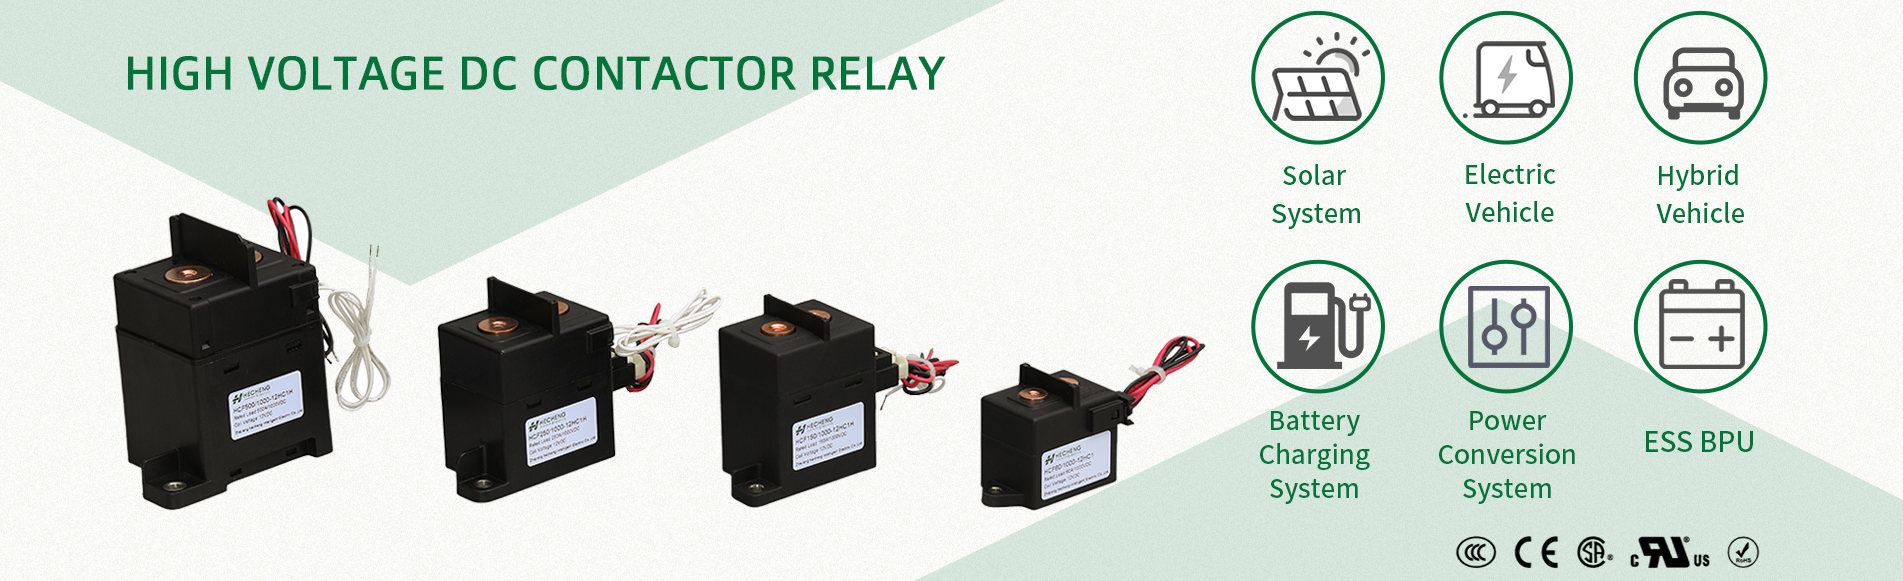 High Voltage DC Contactor Relay